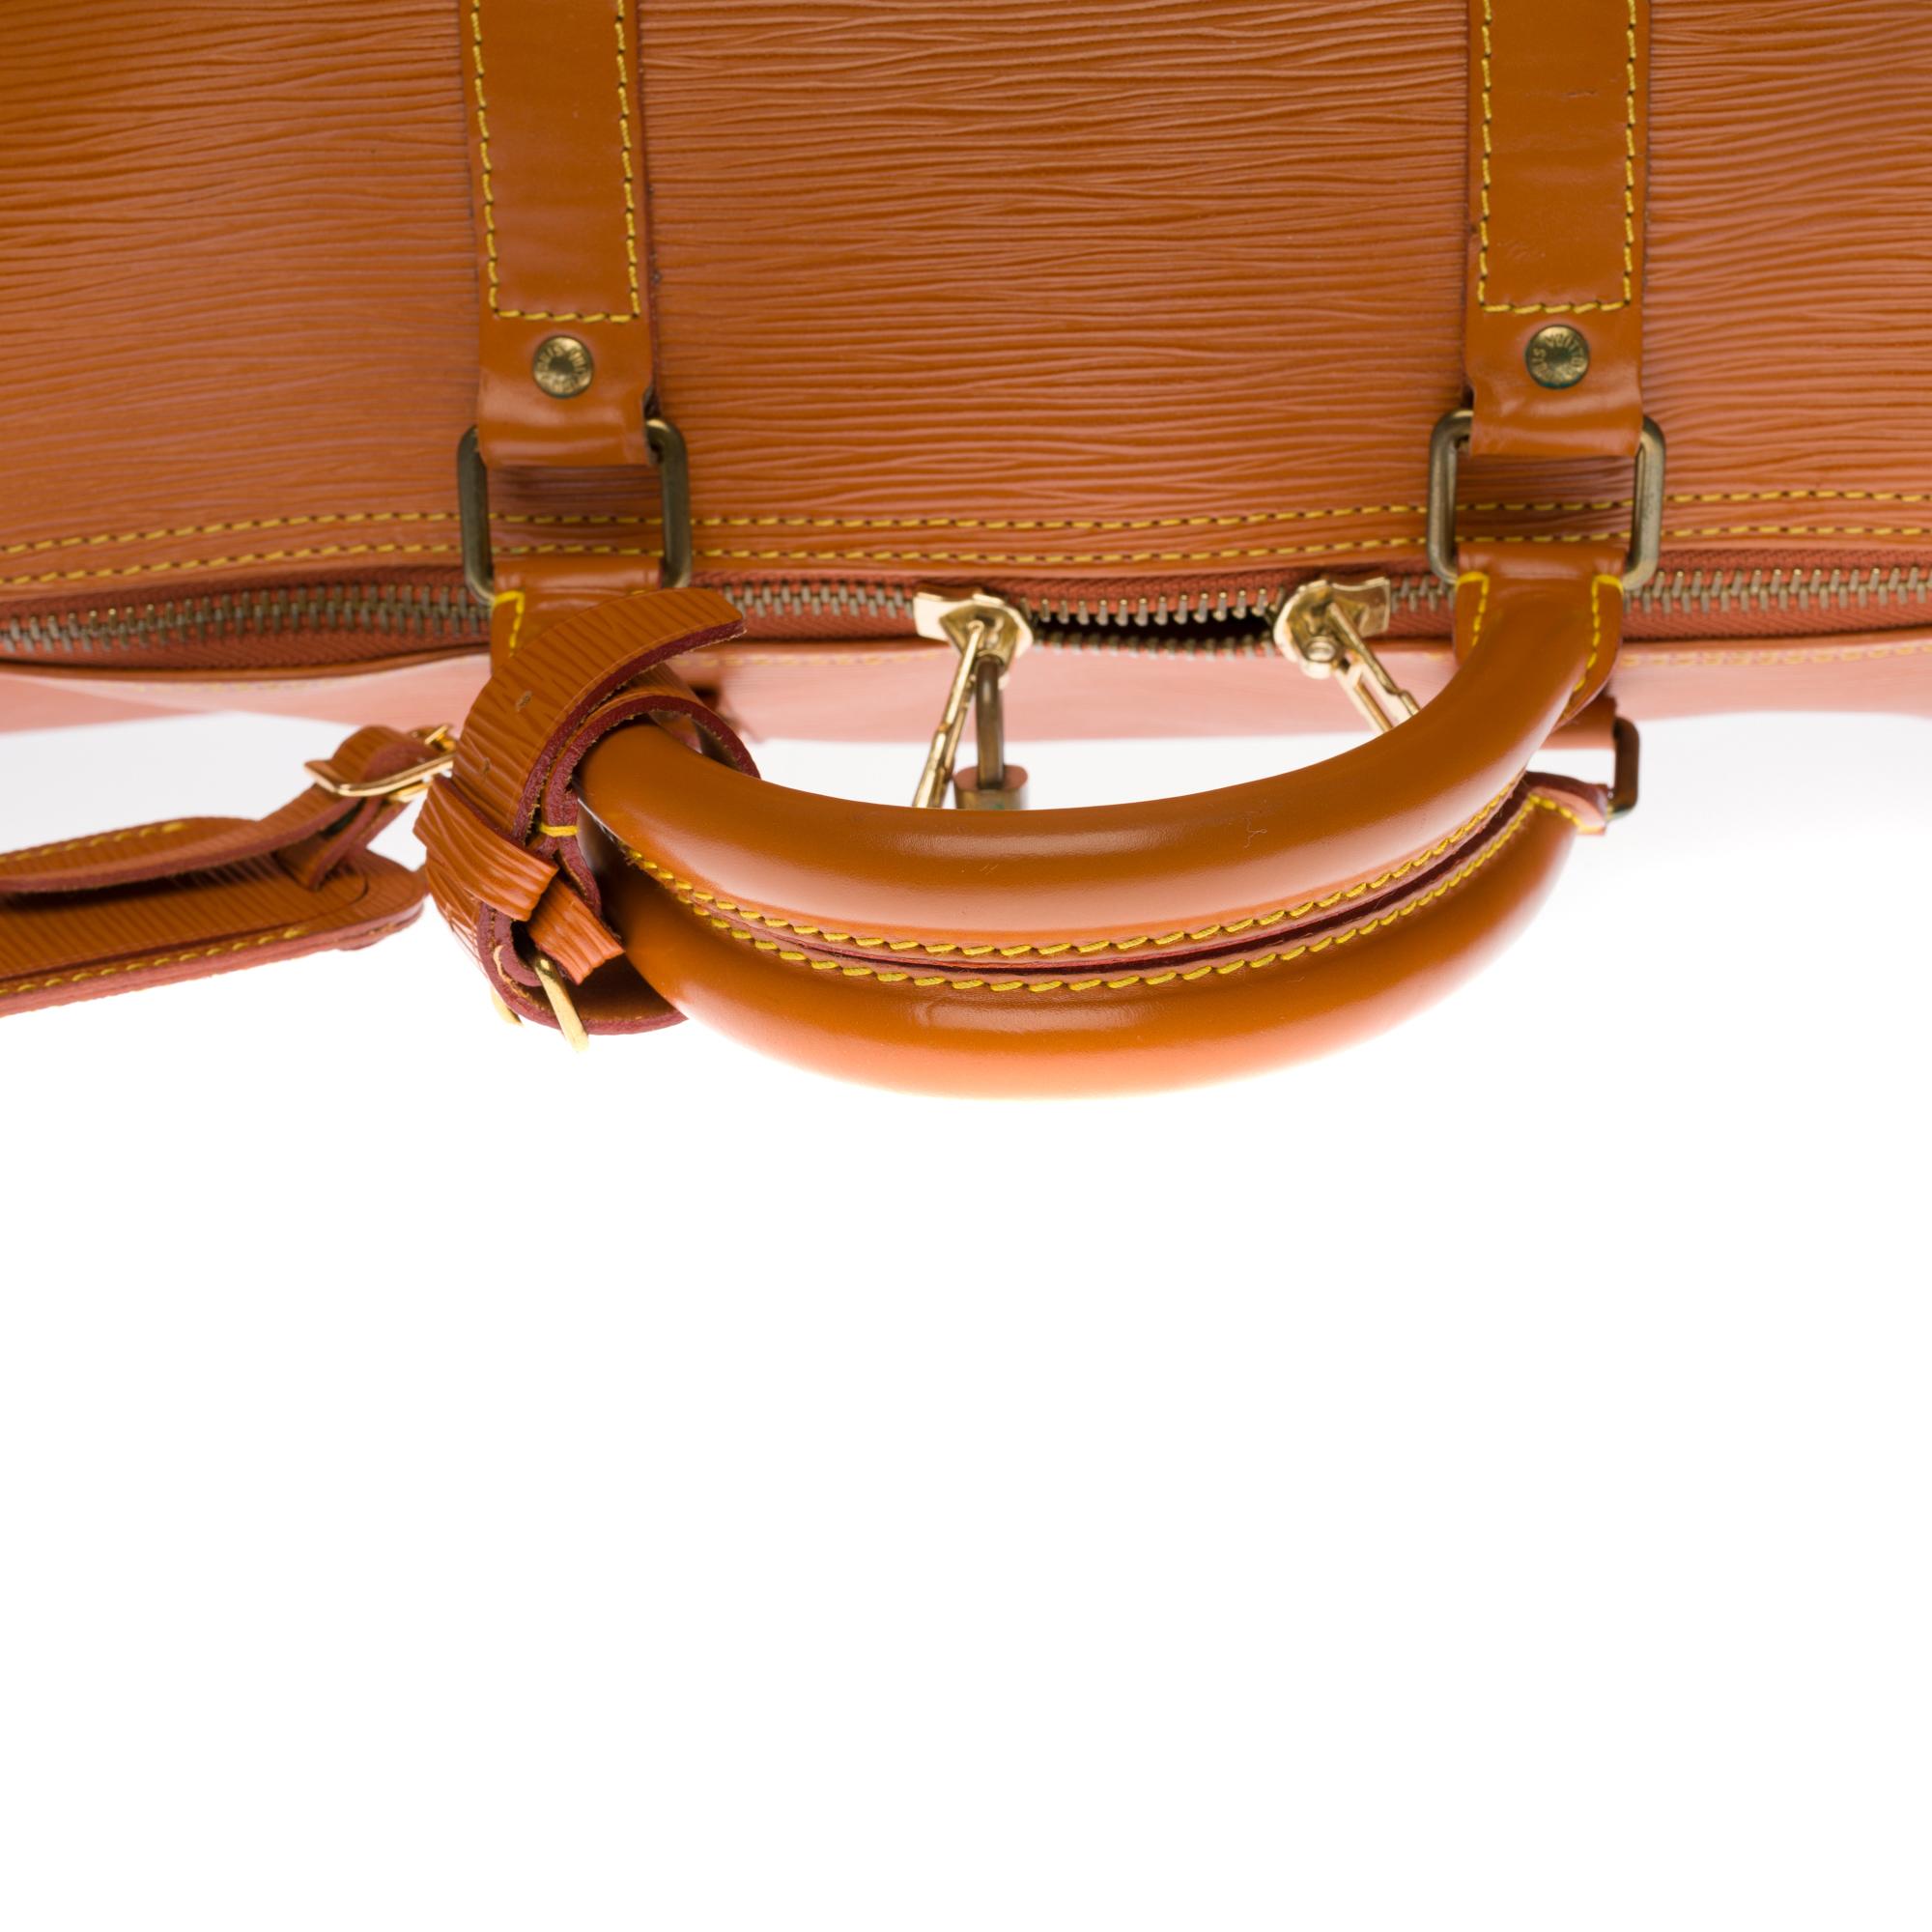 Women's or Men's Louis Vuitton Keepall 55 Travel bag in cognac épi leather